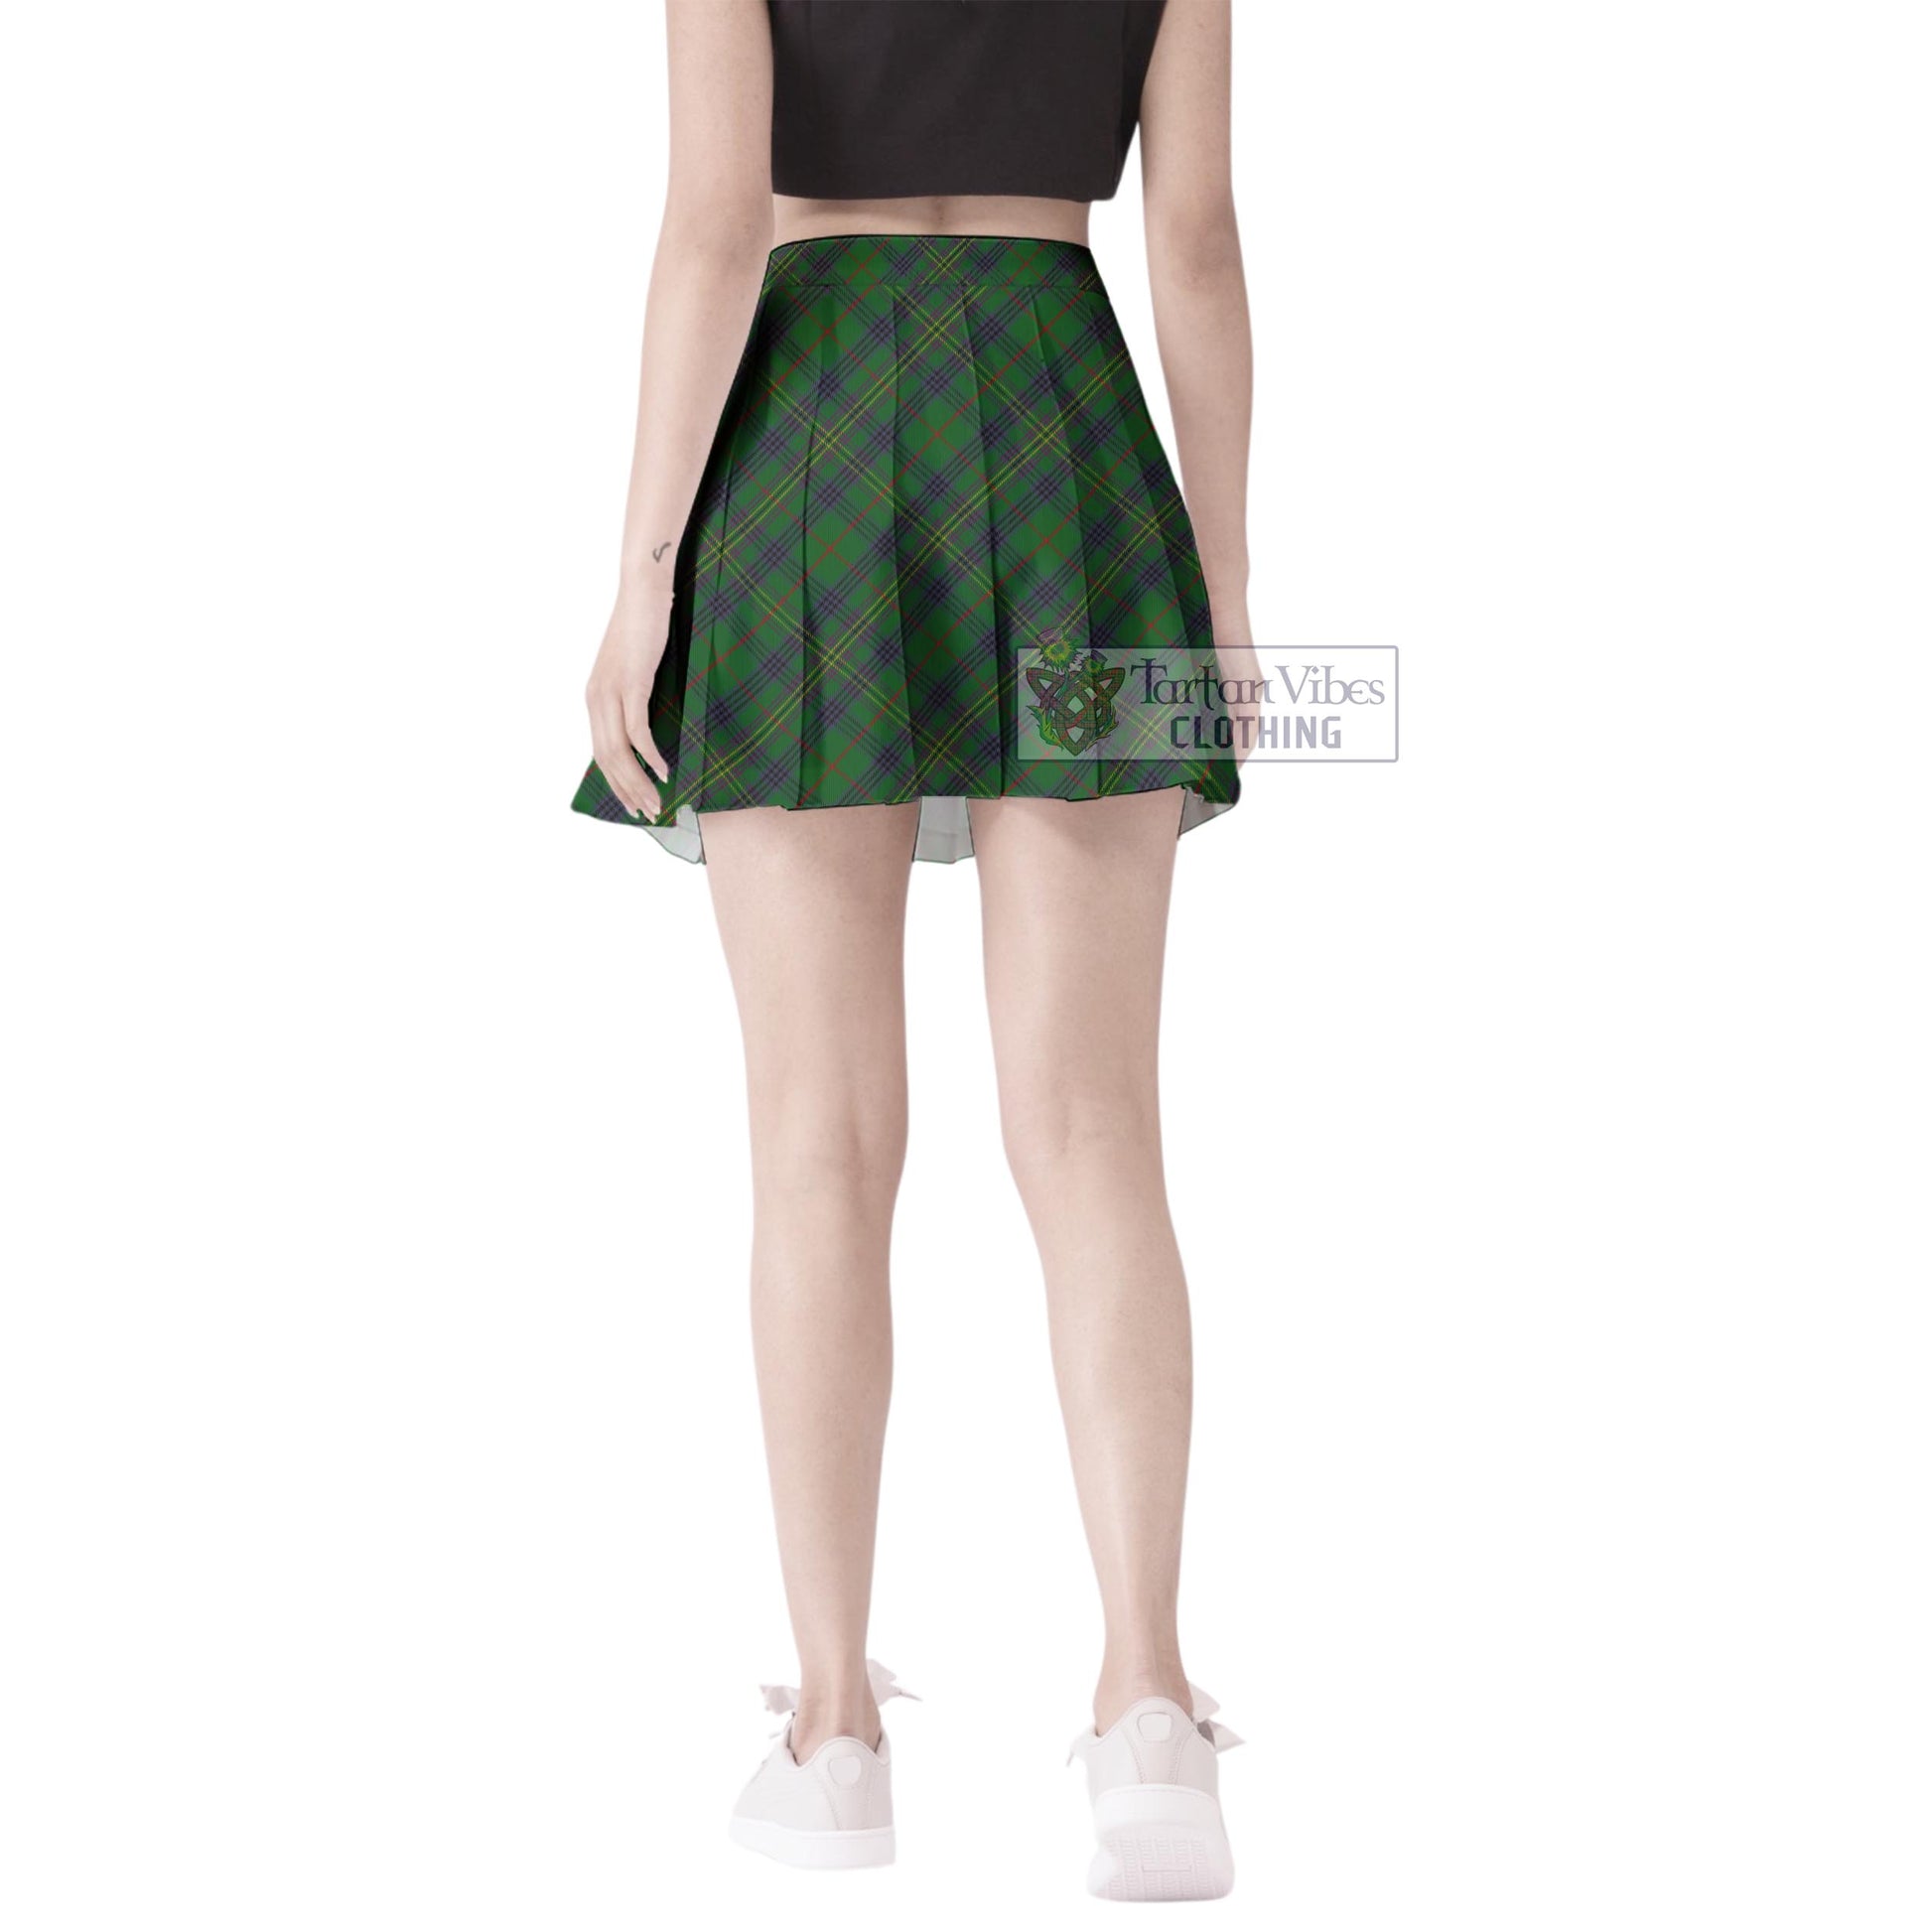 Tartan Vibes Clothing Kennedy Tartan Women's Plated Mini Skirt